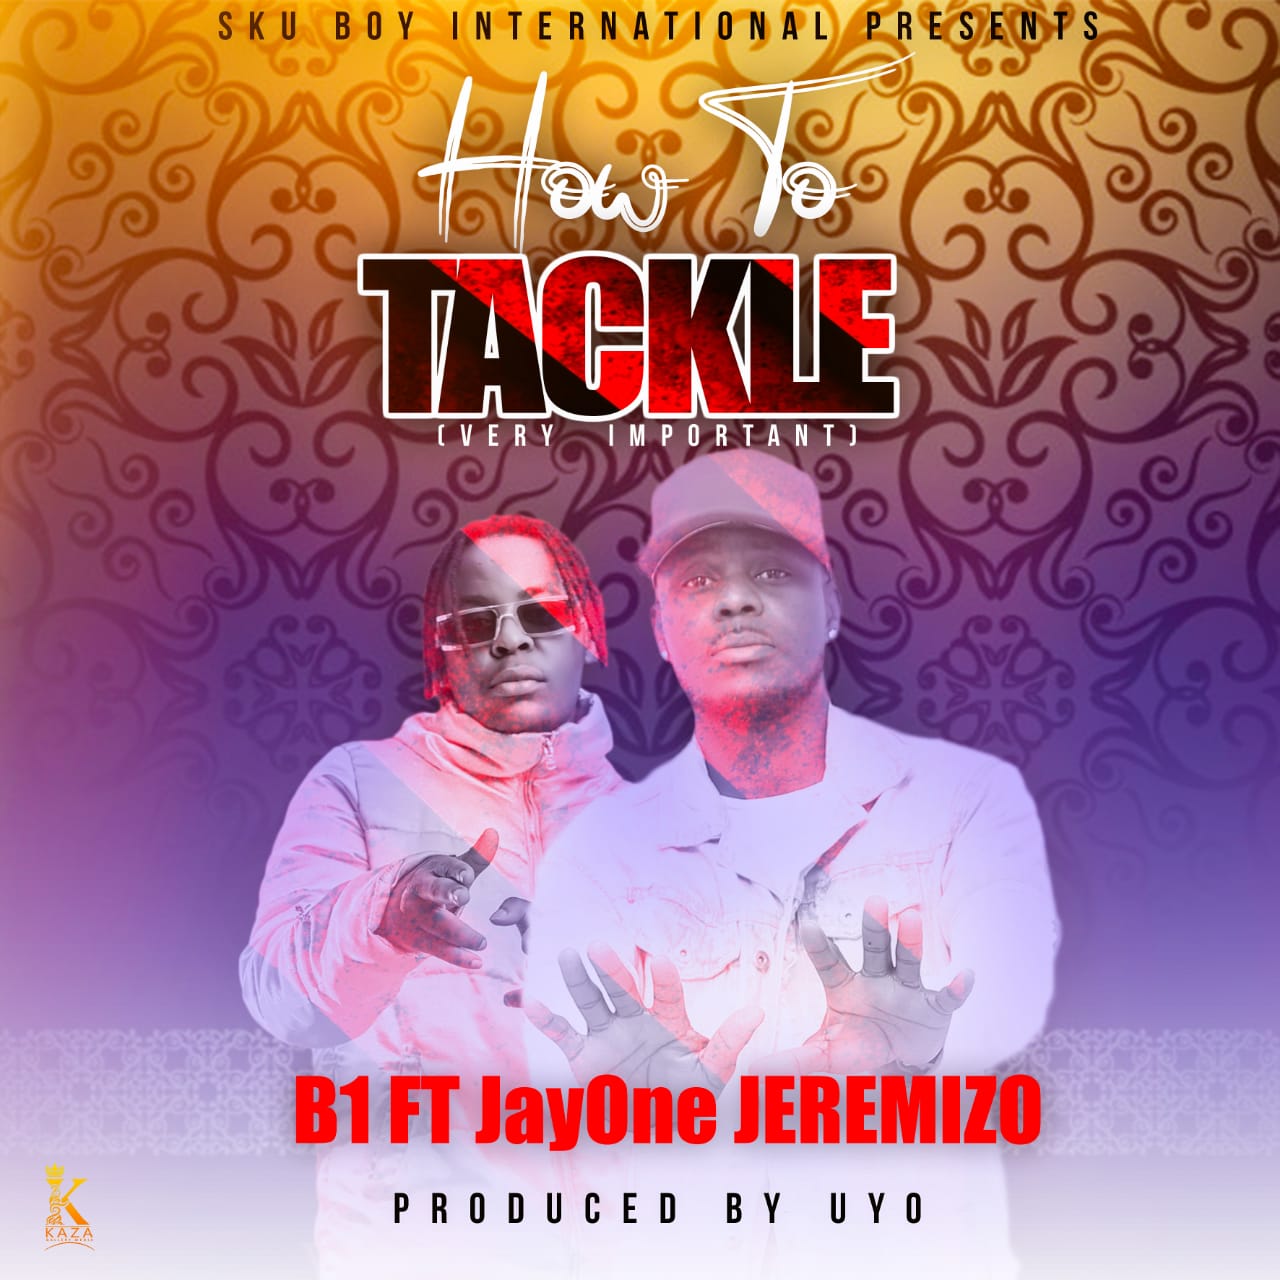 B1 ft. JayOne Jeremizo - 'How to Tackle (Tak0)' Mp3 & Video